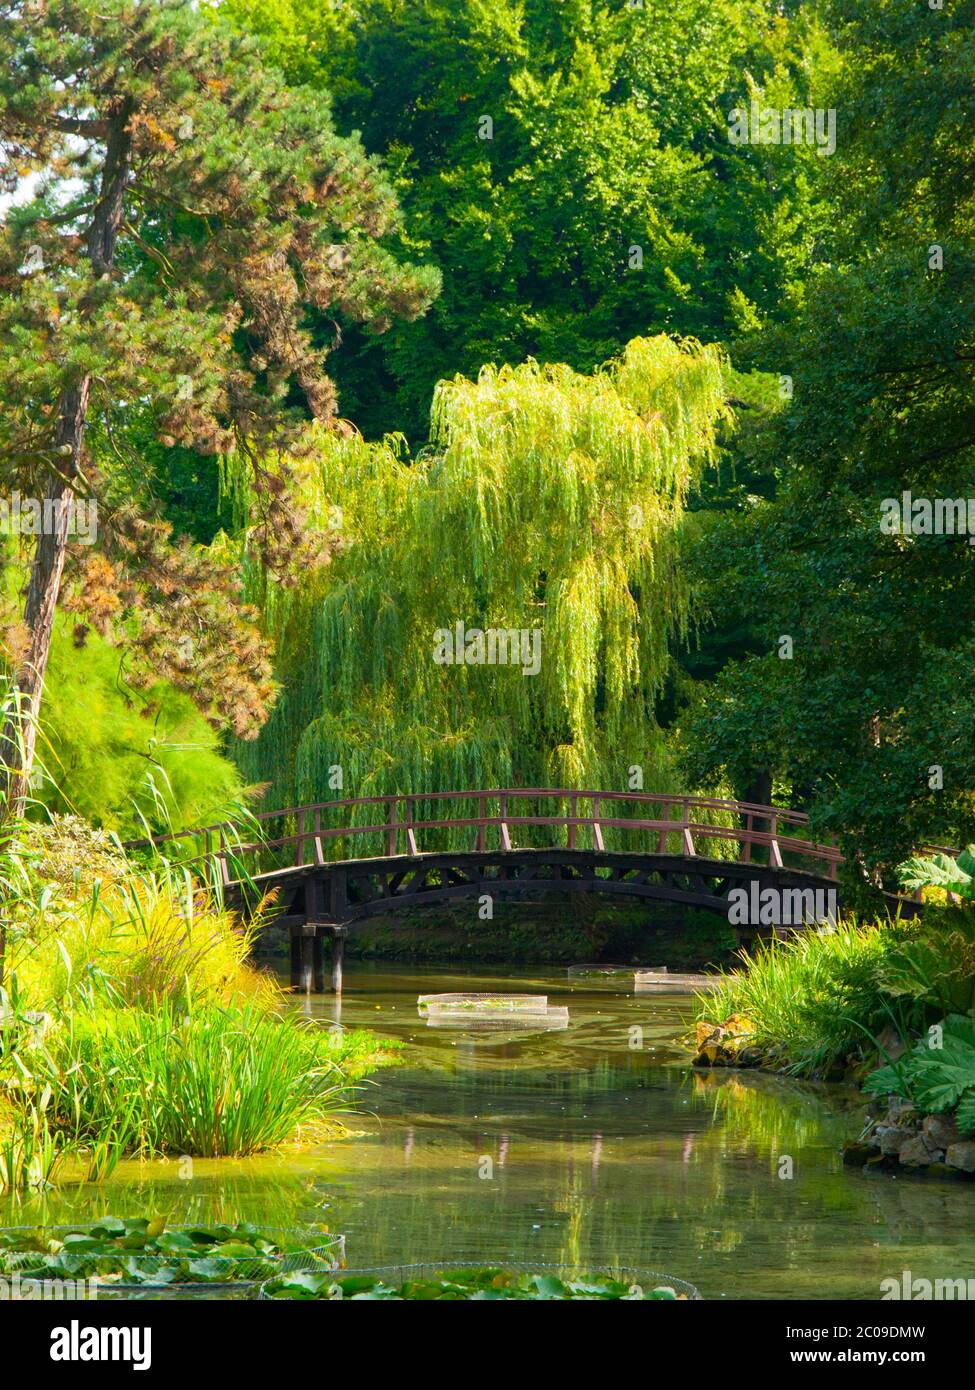 Ponte di legno sul lago in giardino in stile japanese Foto Stock